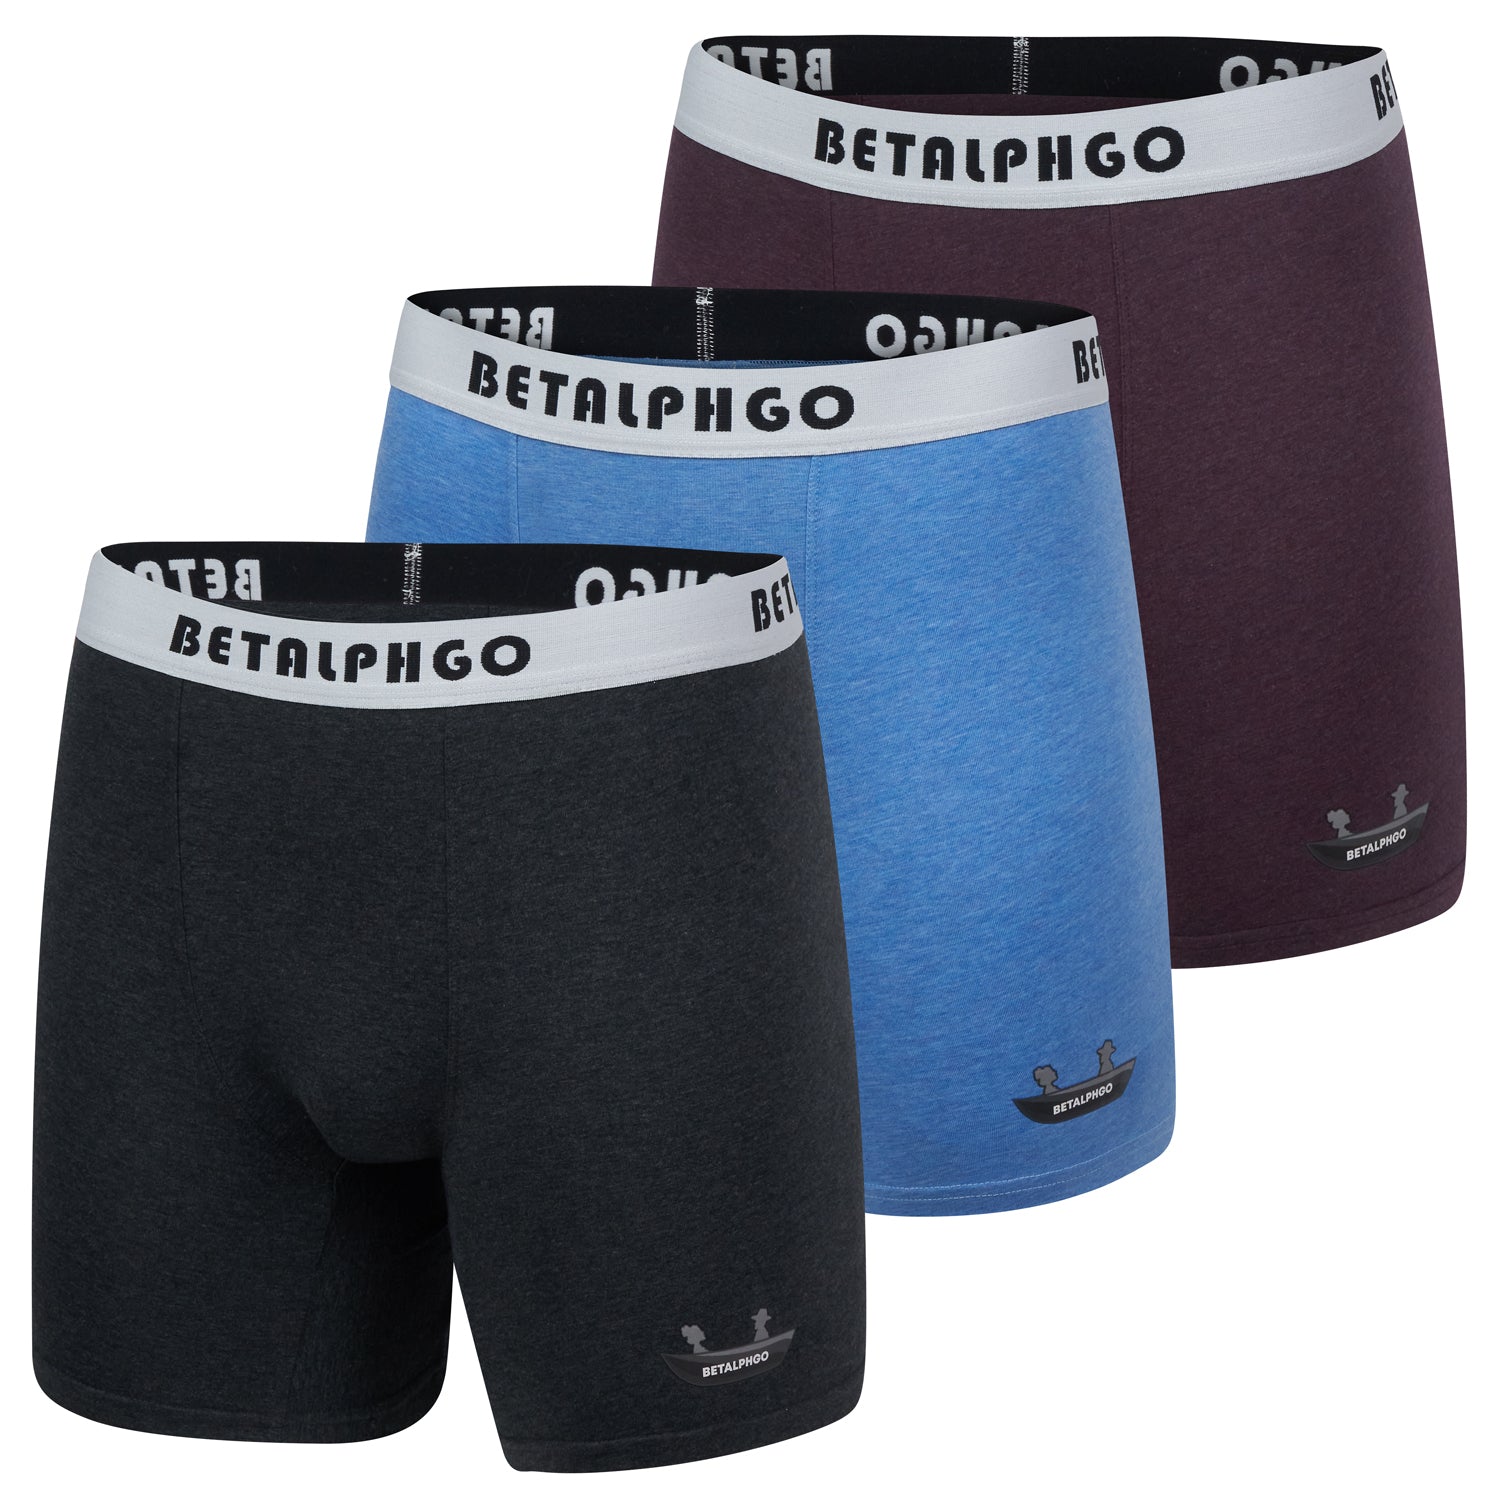 Bamboo Underwear Boxer Briefs (Pack of 3)-Black Hemp Grey, Lake Blue ...